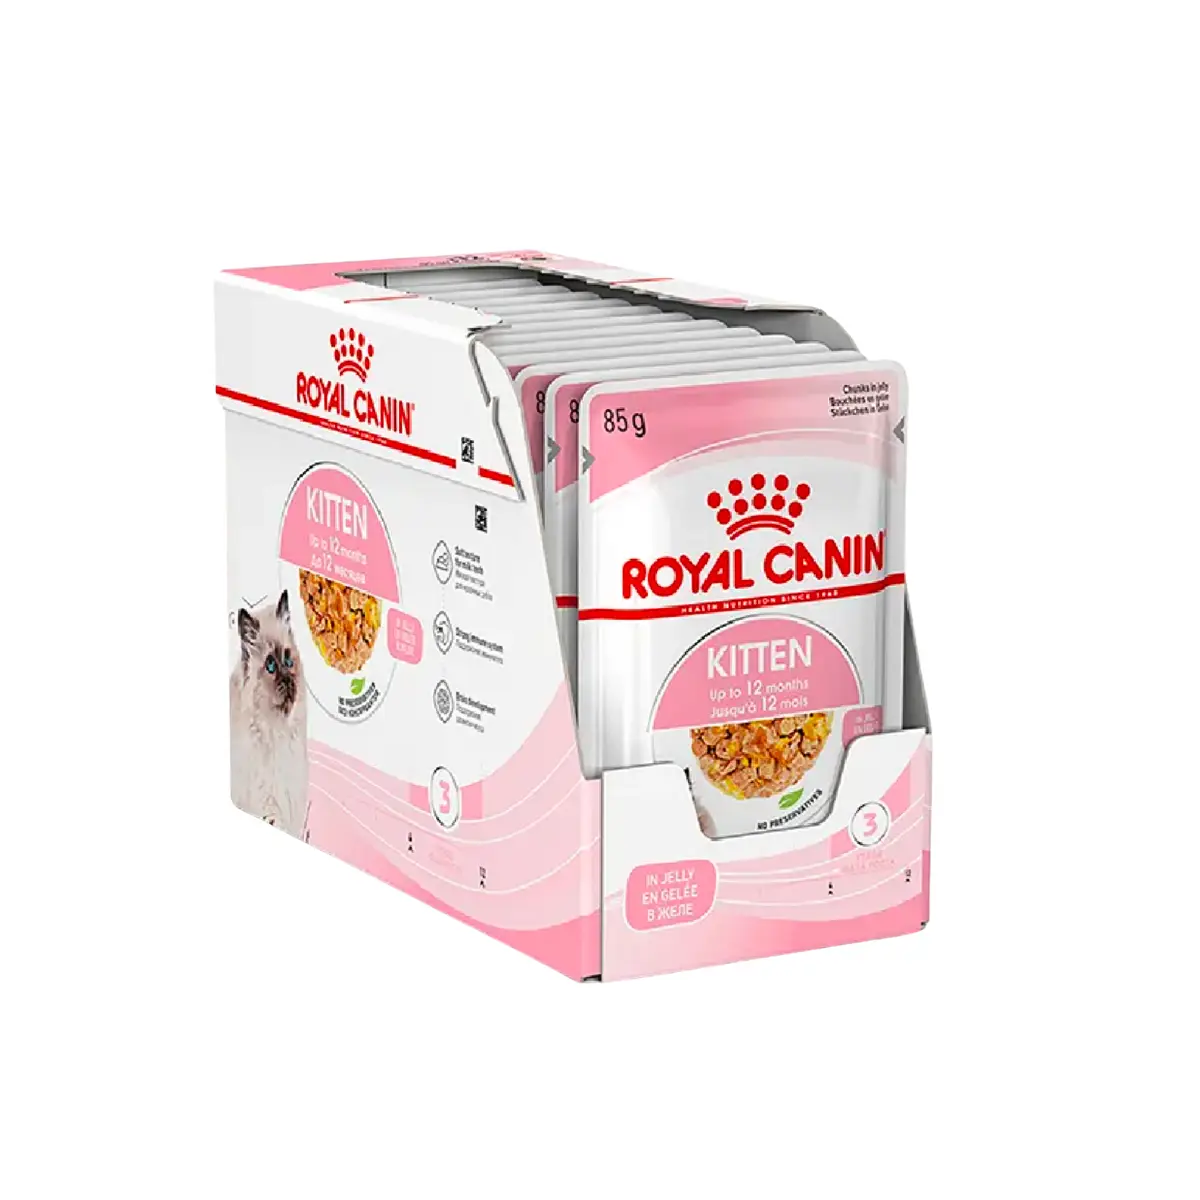 Royal Canin - Kitten Wet Food In Jelly 85g